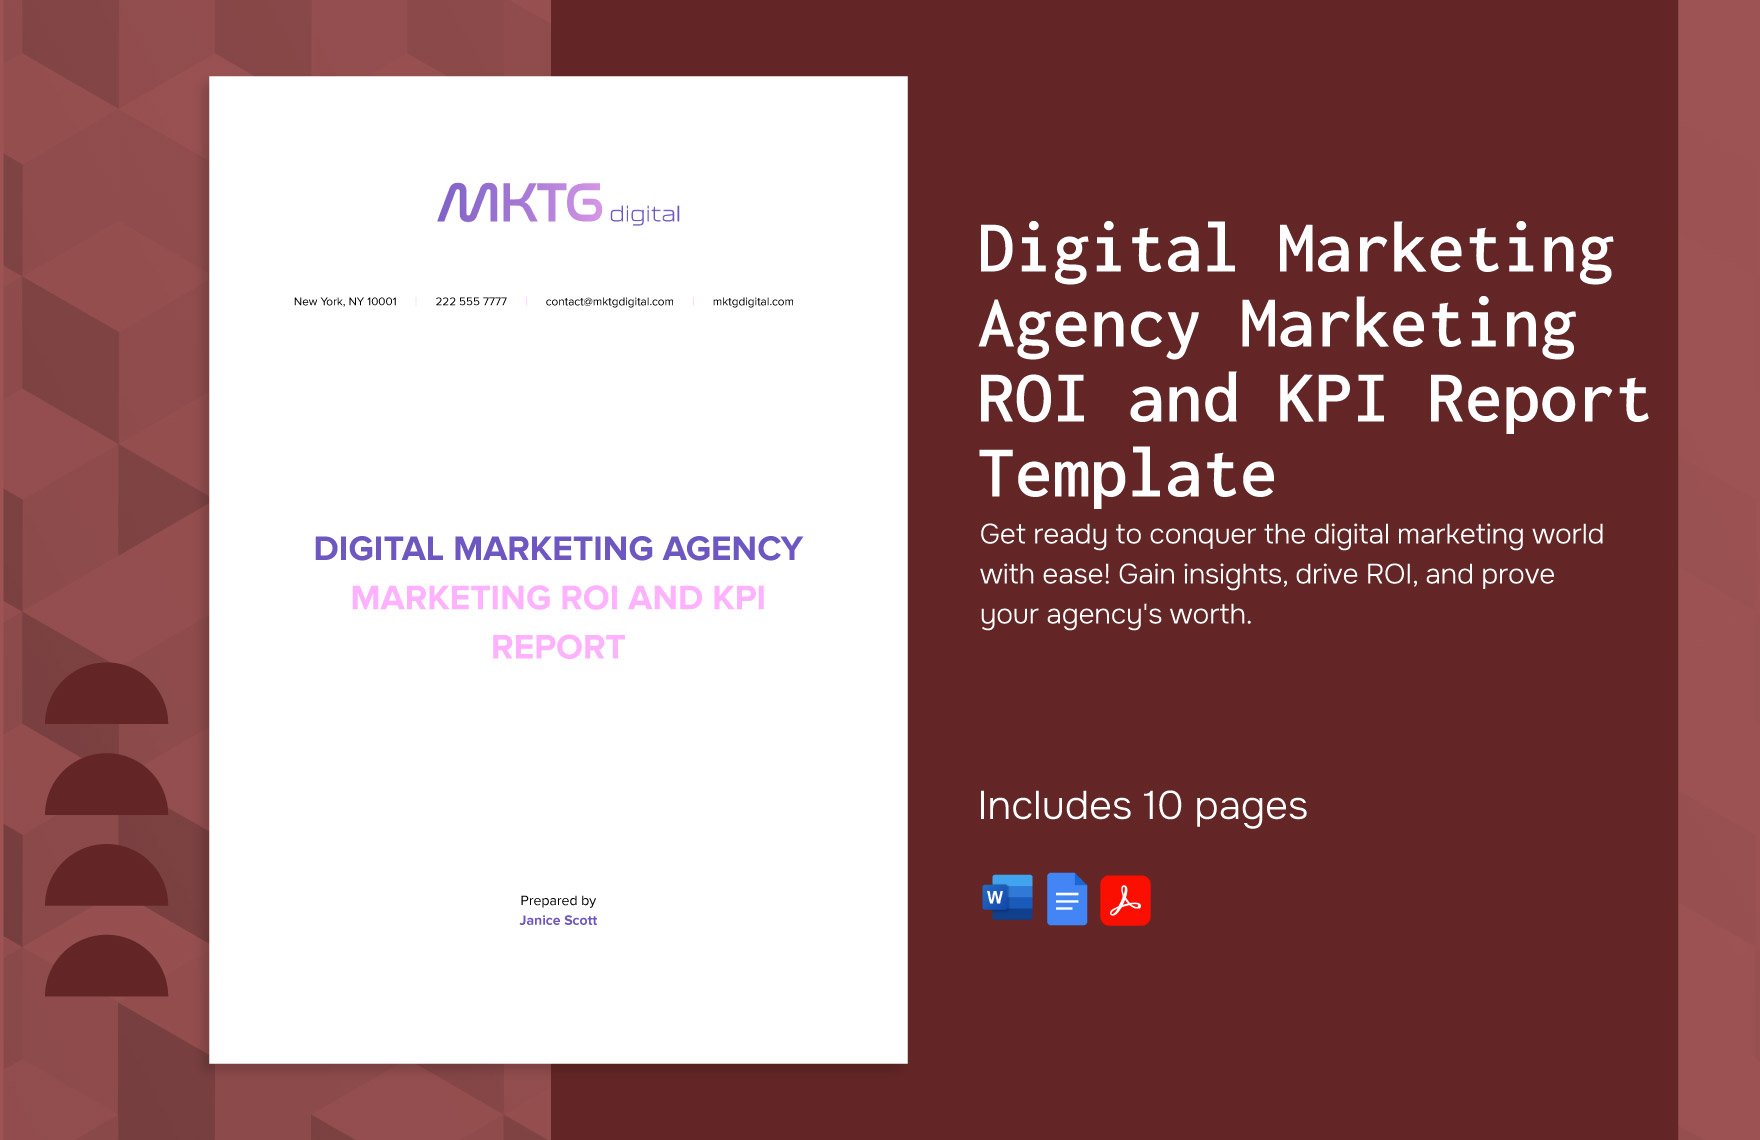 Digital Marketing Agency Marketing ROI and KPI Report Template